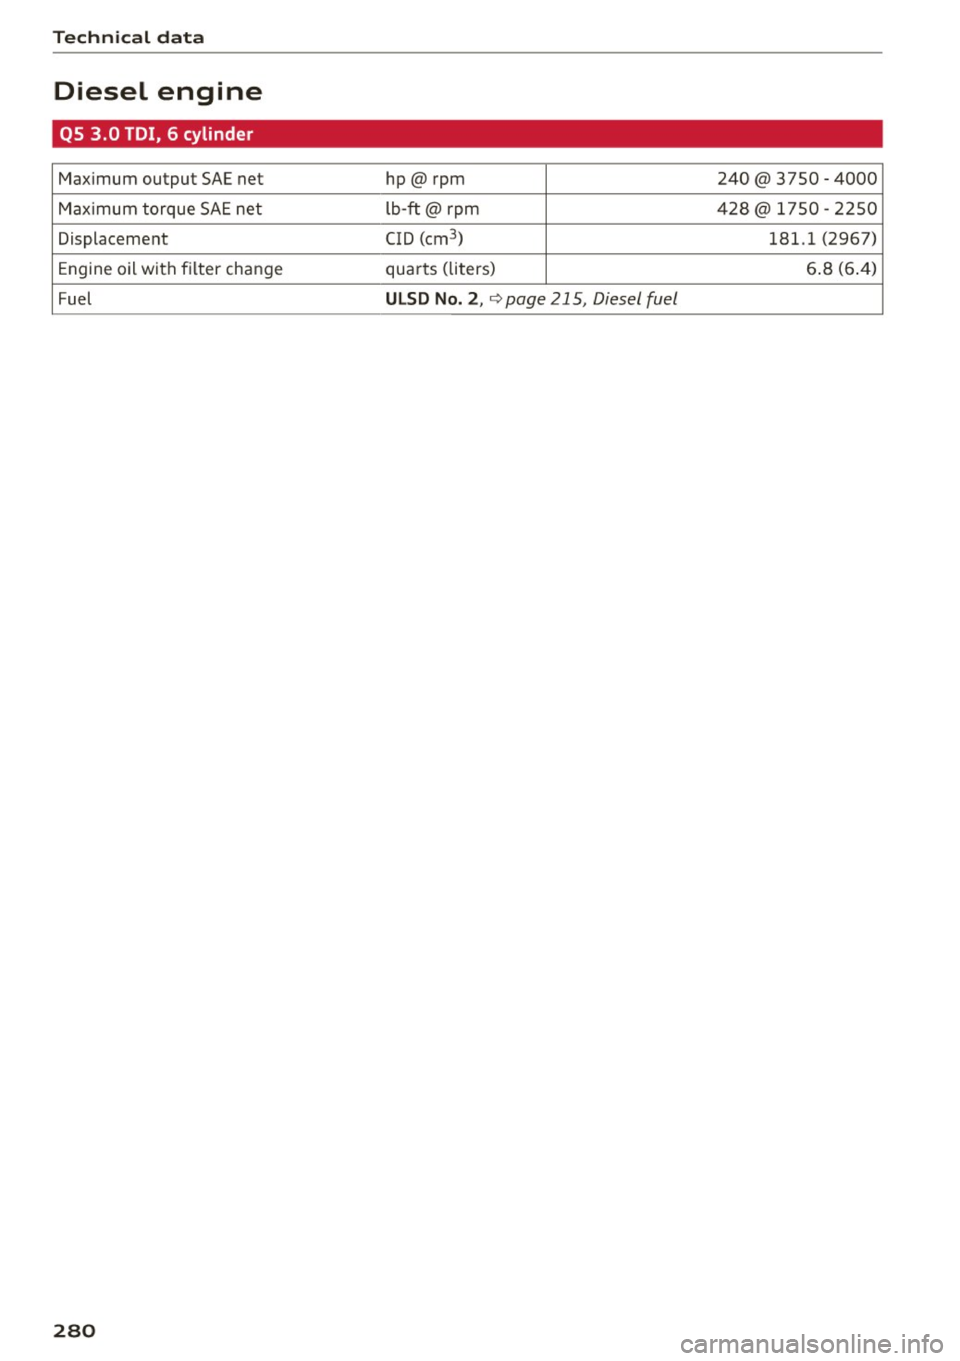 AUDI Q5 2015  Owners Manual Technical data 
Diesel  engine 
QS  3.0  TDI,  6  cylinder 
Maximum  output  SAE net  hp@rpm  240@  3750  - 4000 
Maximum  torque  SAE  net  lb-ft @ rpm  428@ 
1750 -2250 
Displacement  CID (cm
3
) 18